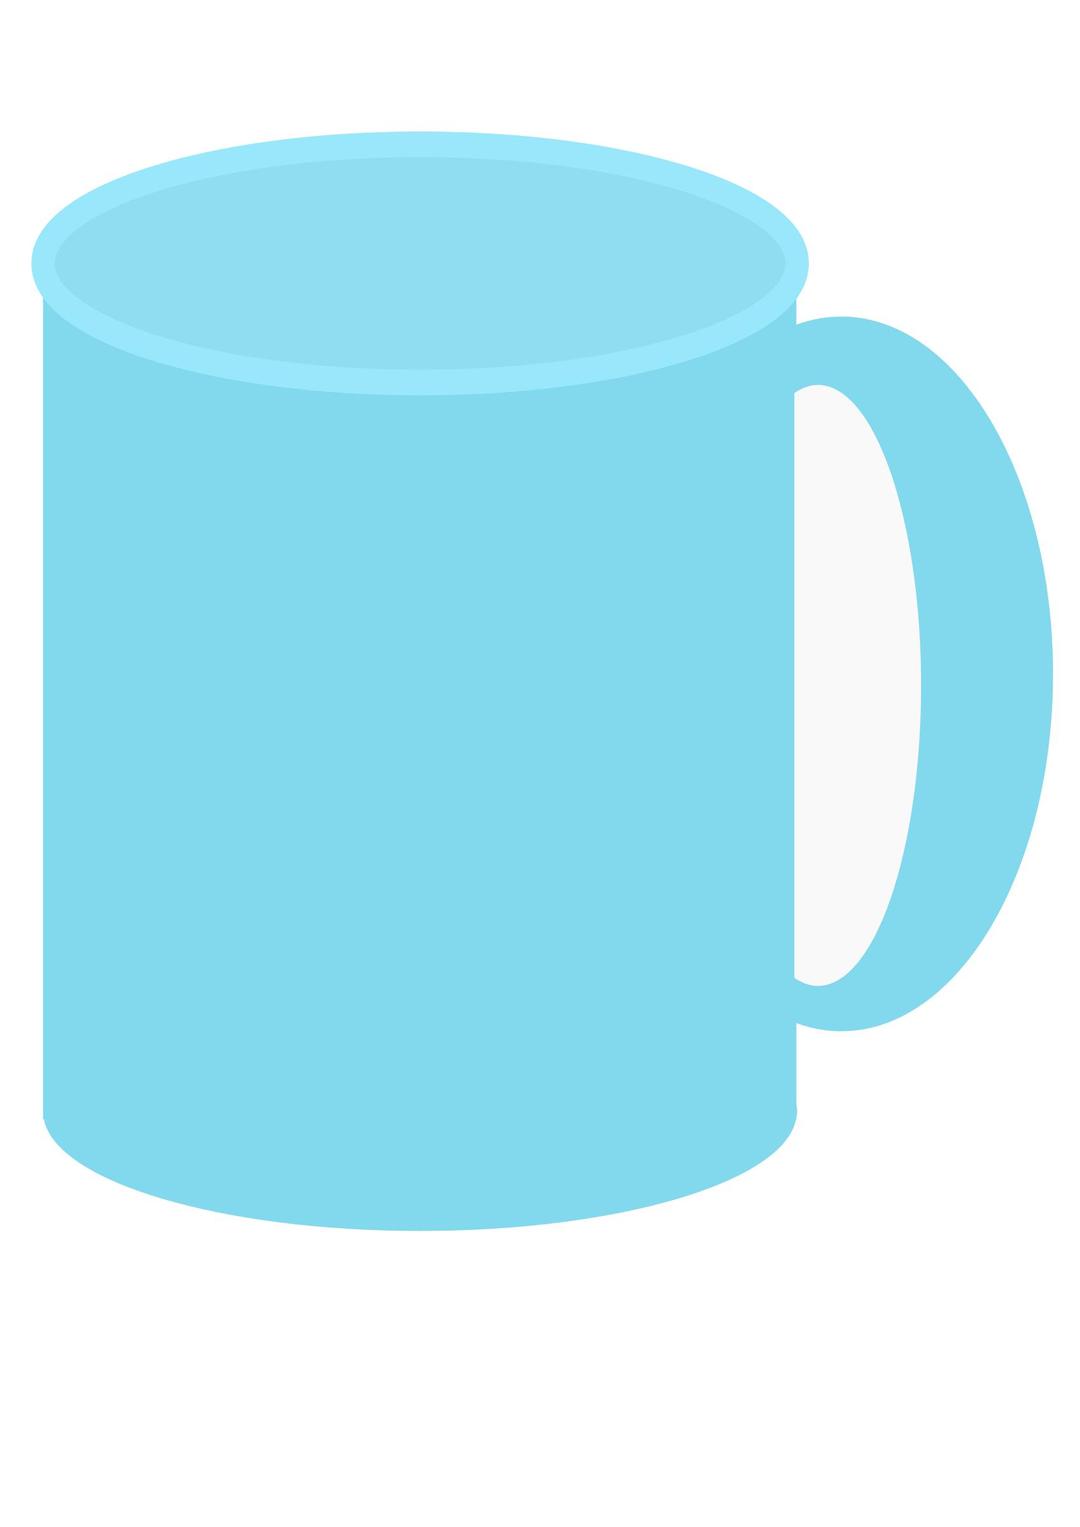 Simple mug png transparent